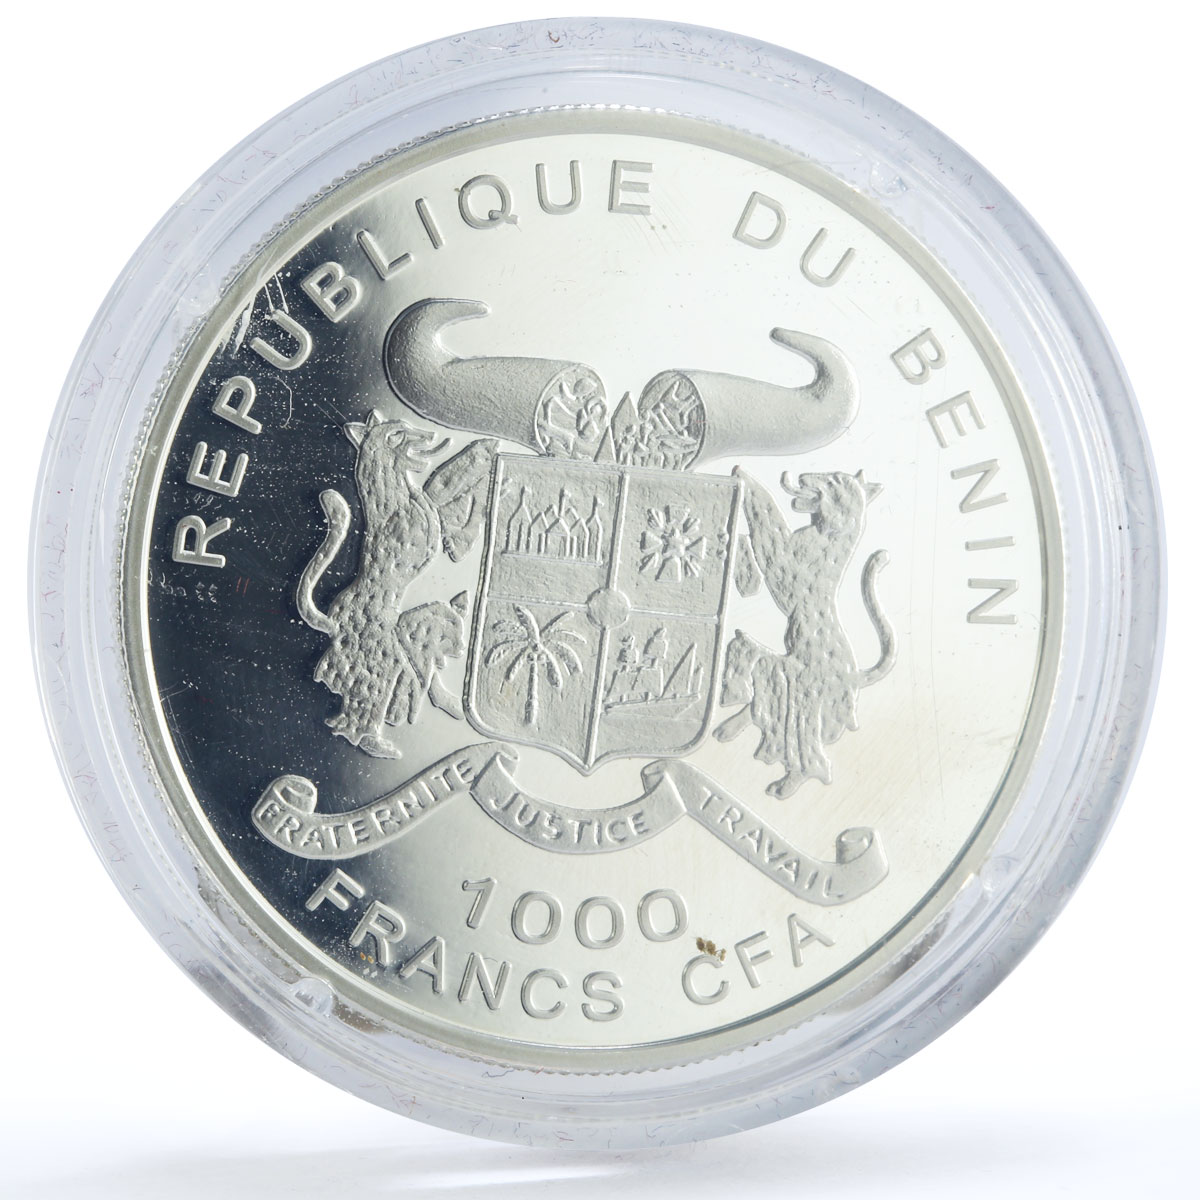 Benin 1000 francs Trains Railways Kaiser Ferdinand Locomotive silver coin 2007